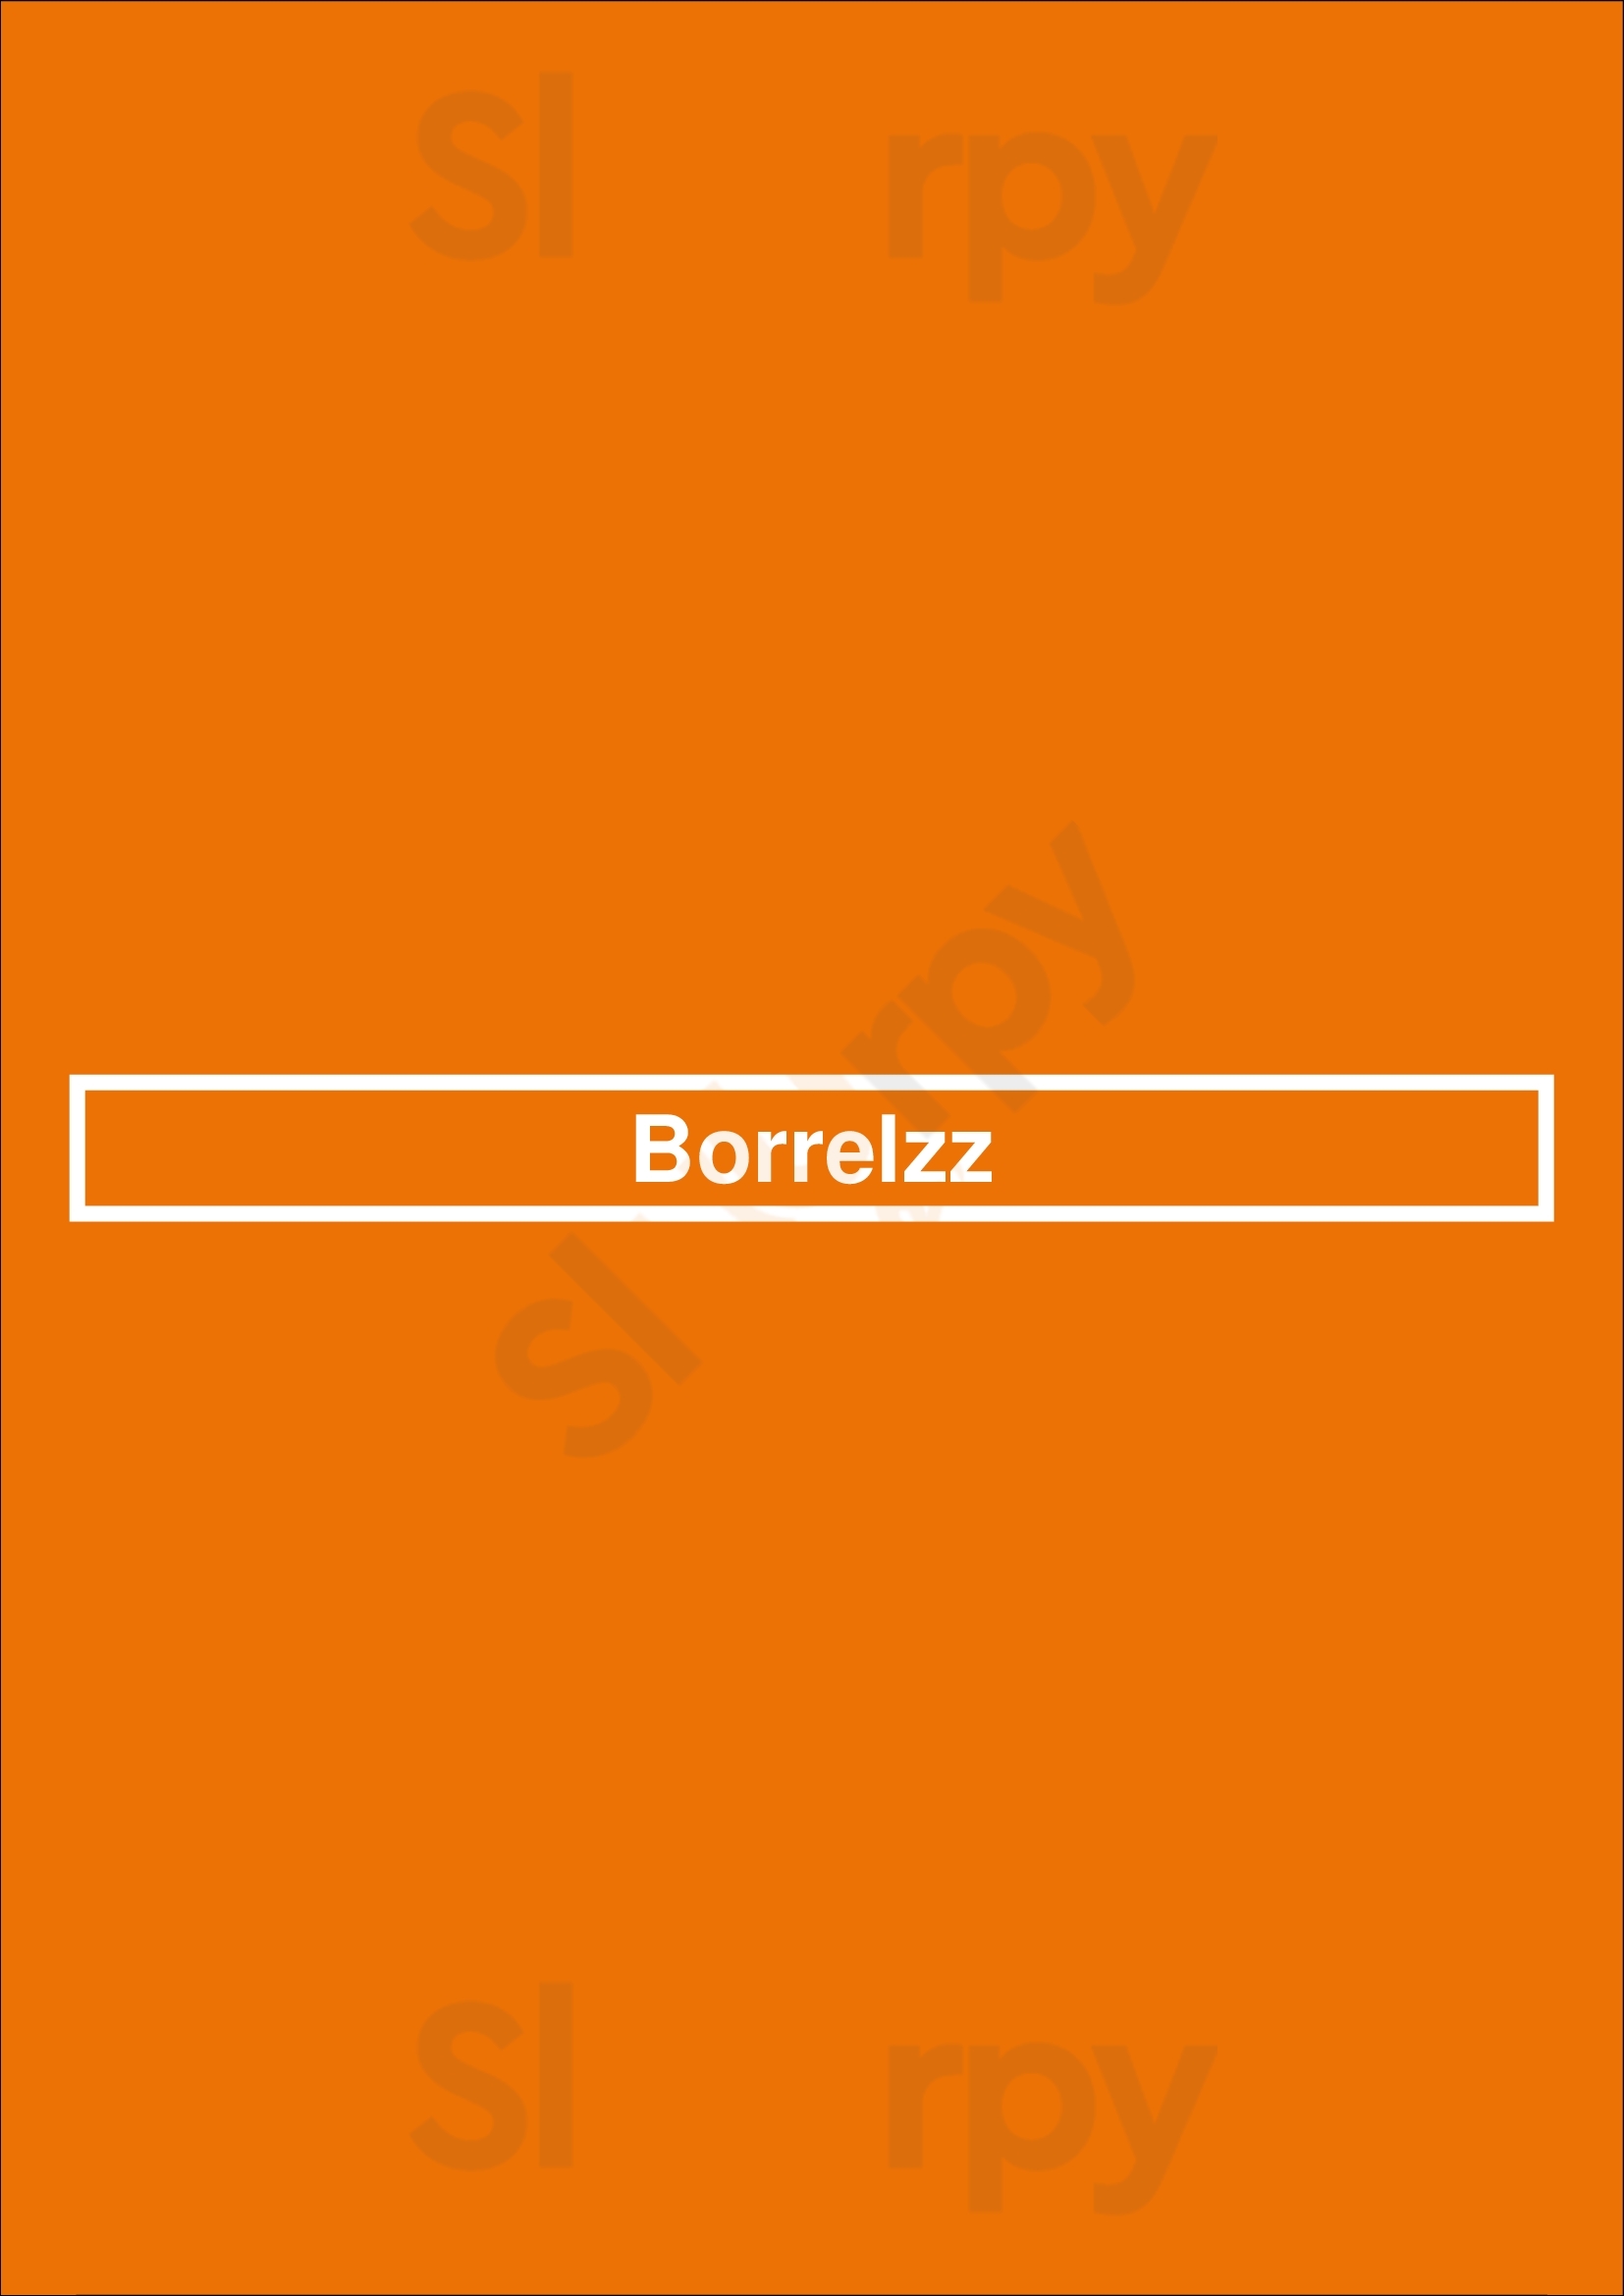 Borrelzz Huissen Menu - 1